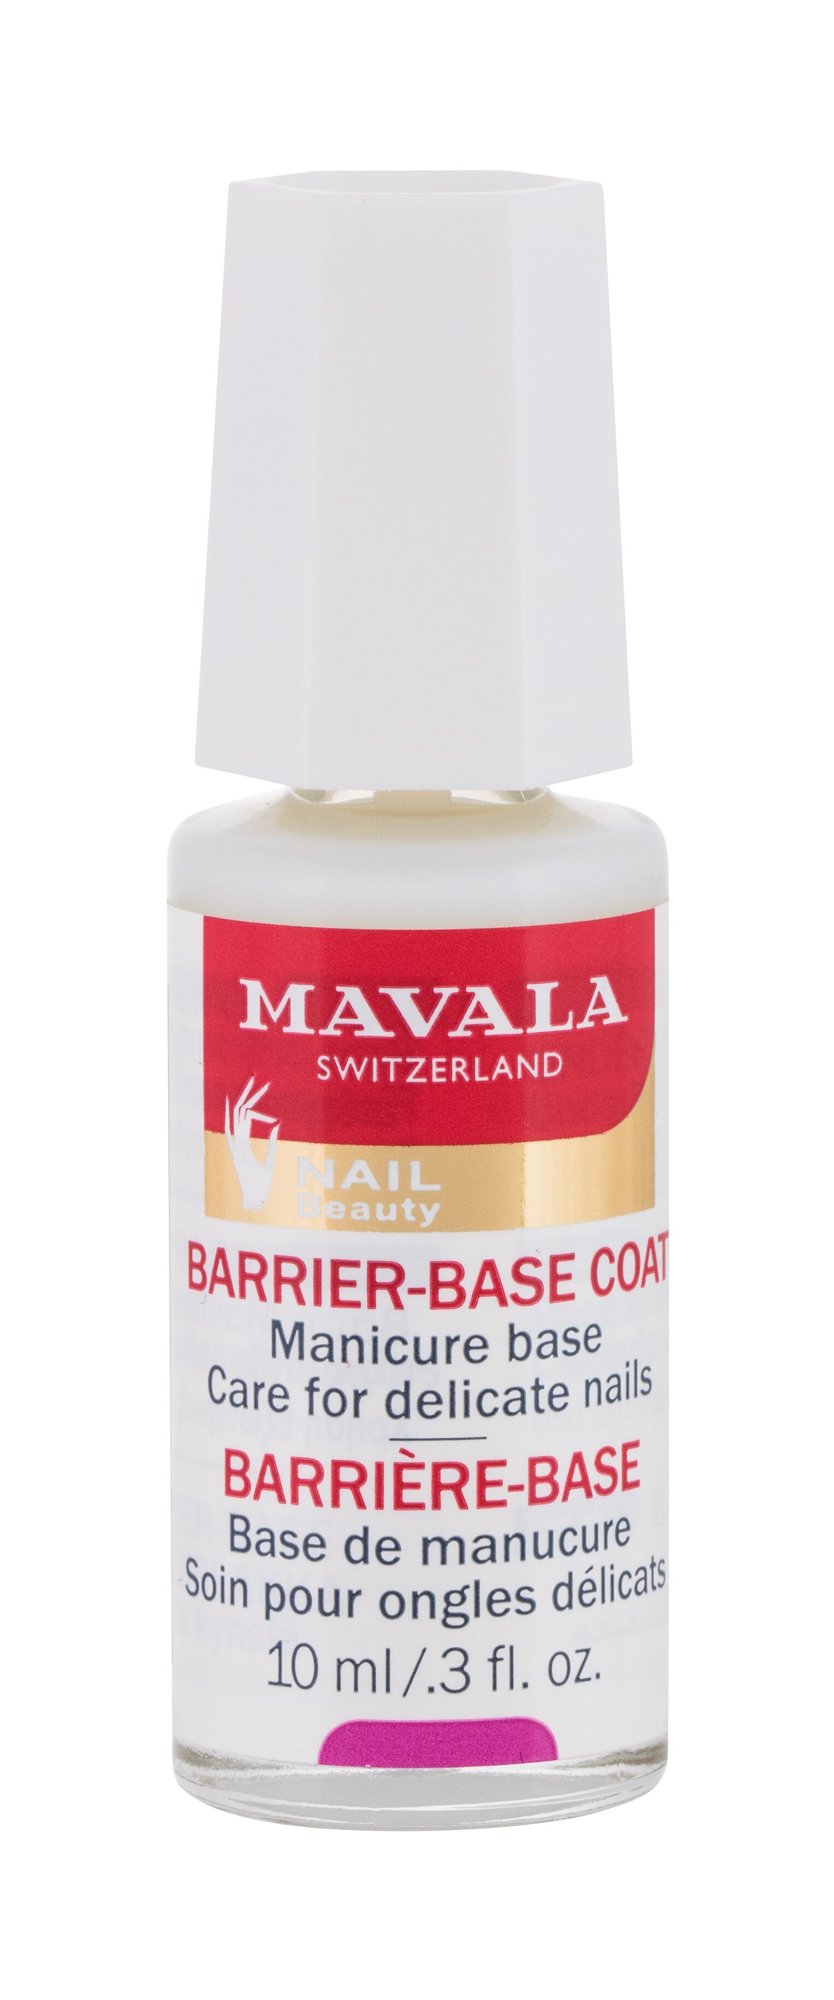 MAVALA Nail Beauty Barrier-Base Coat 10ml nagų priežiūrai